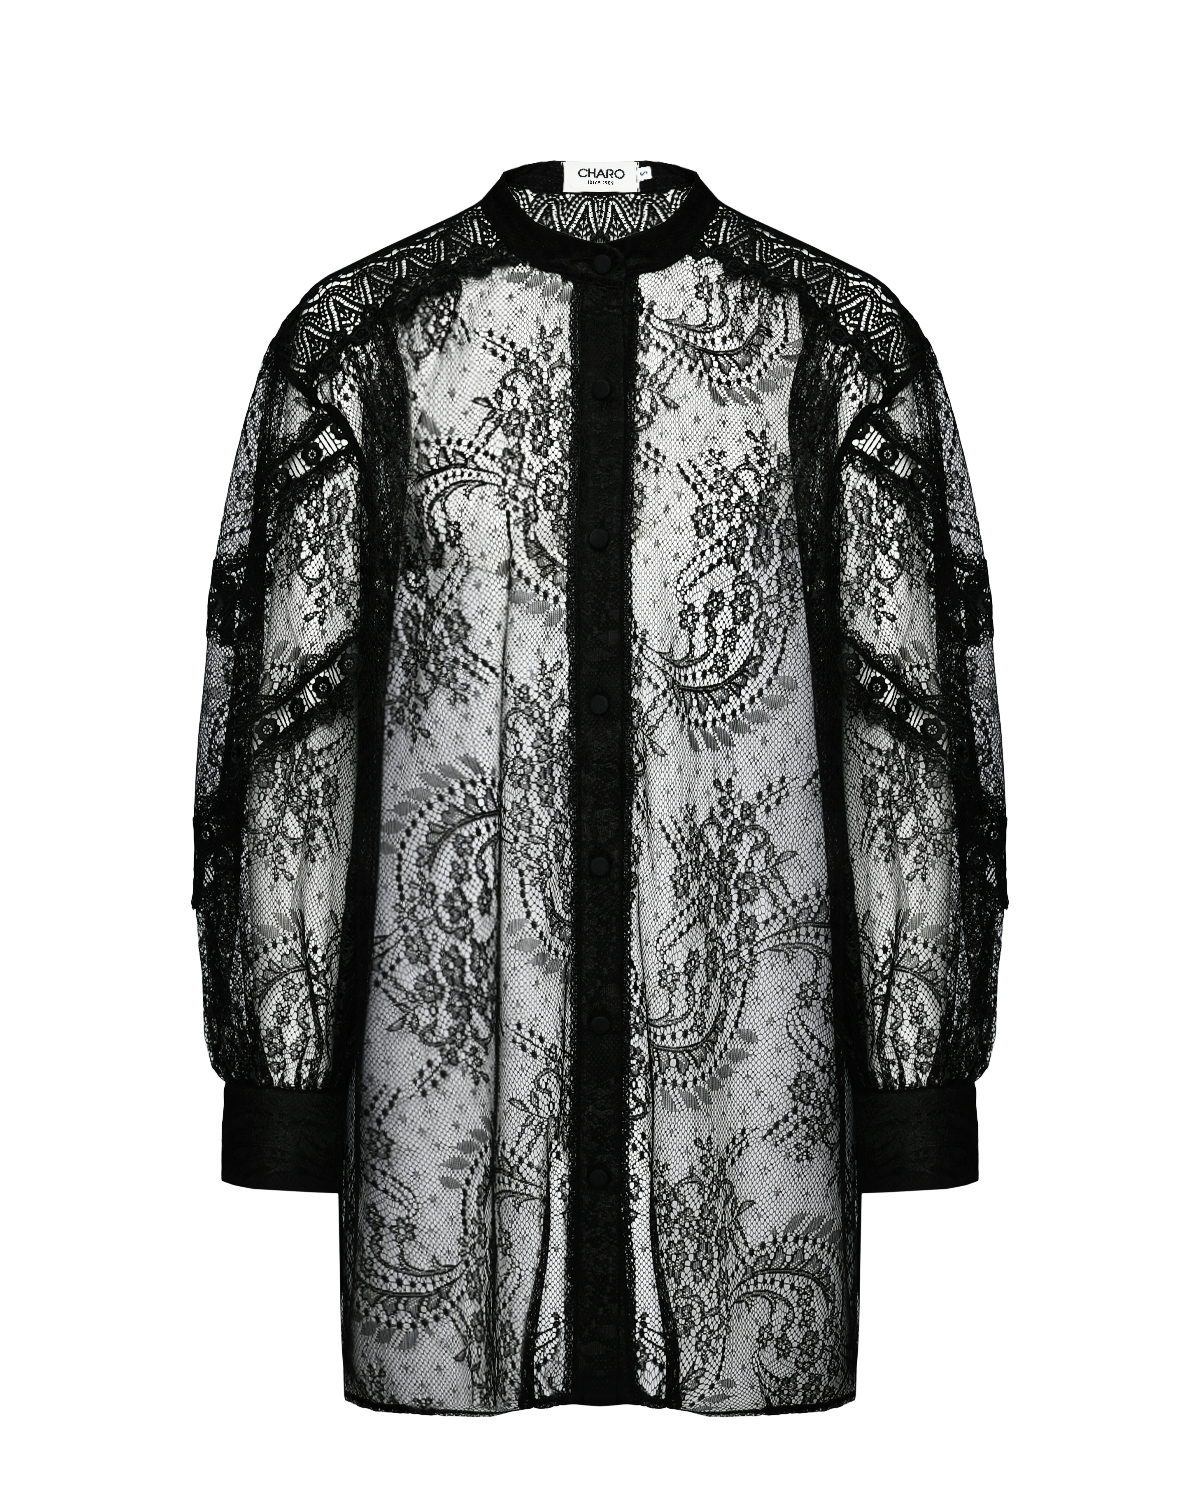 Гипюровая блузка, черная Charo Ruiz, размер 40, цвет нет цвета